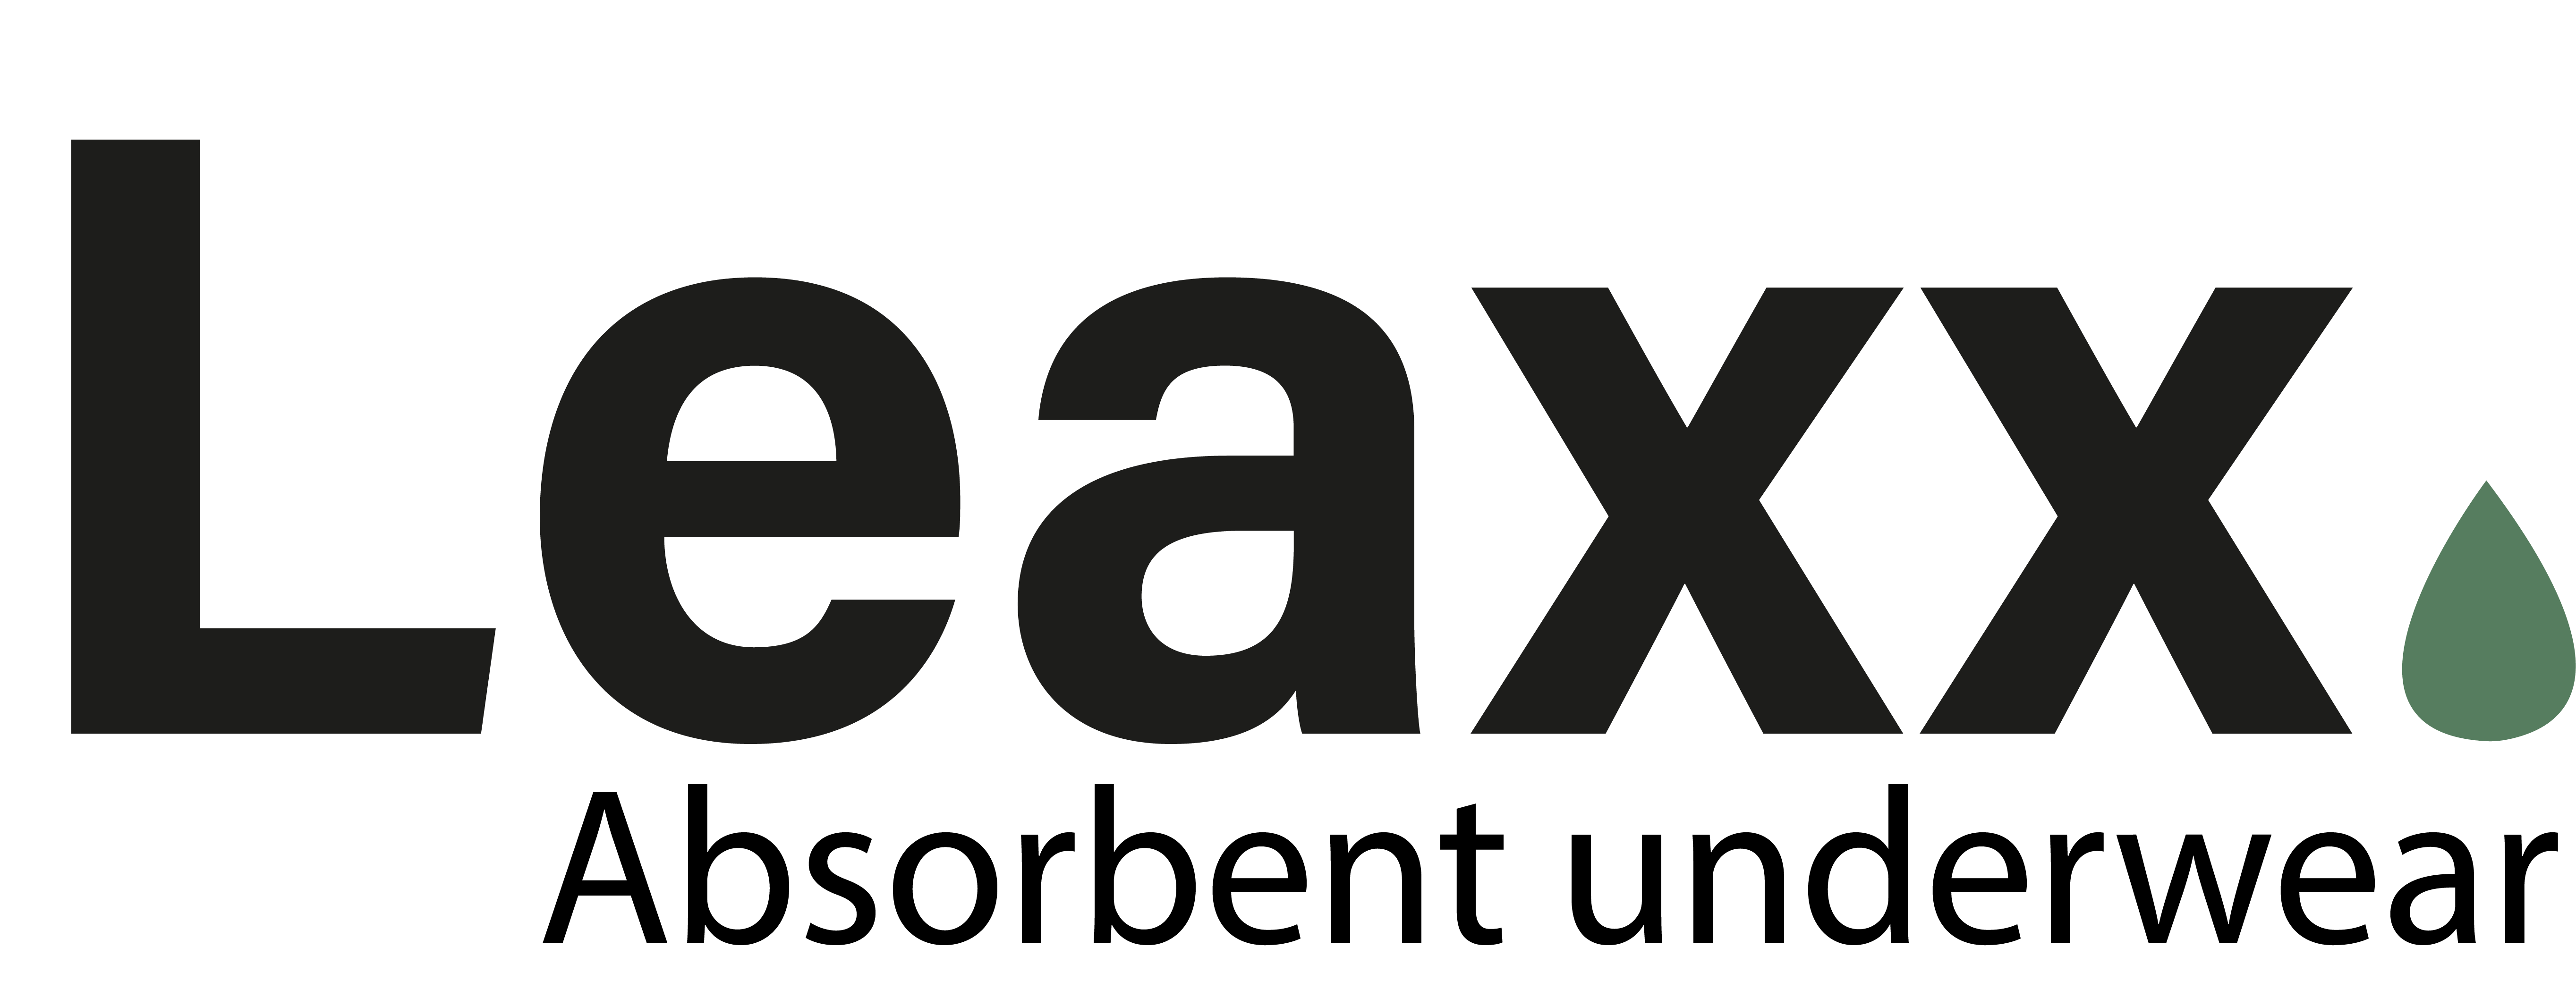 LEAXX